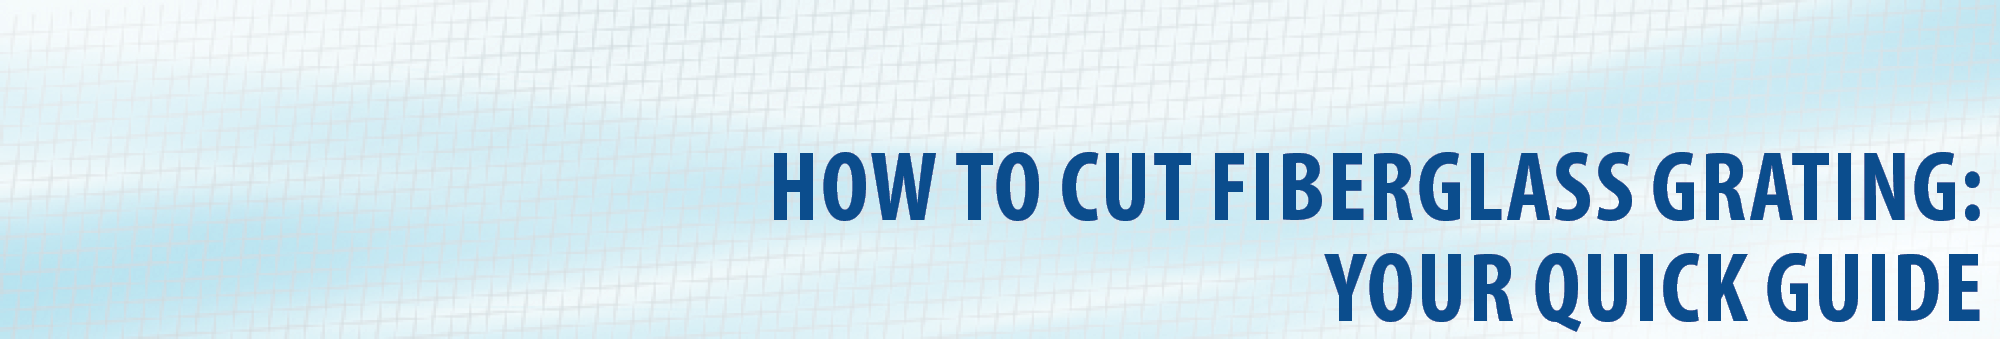 How to Cut Fiberglass Grating